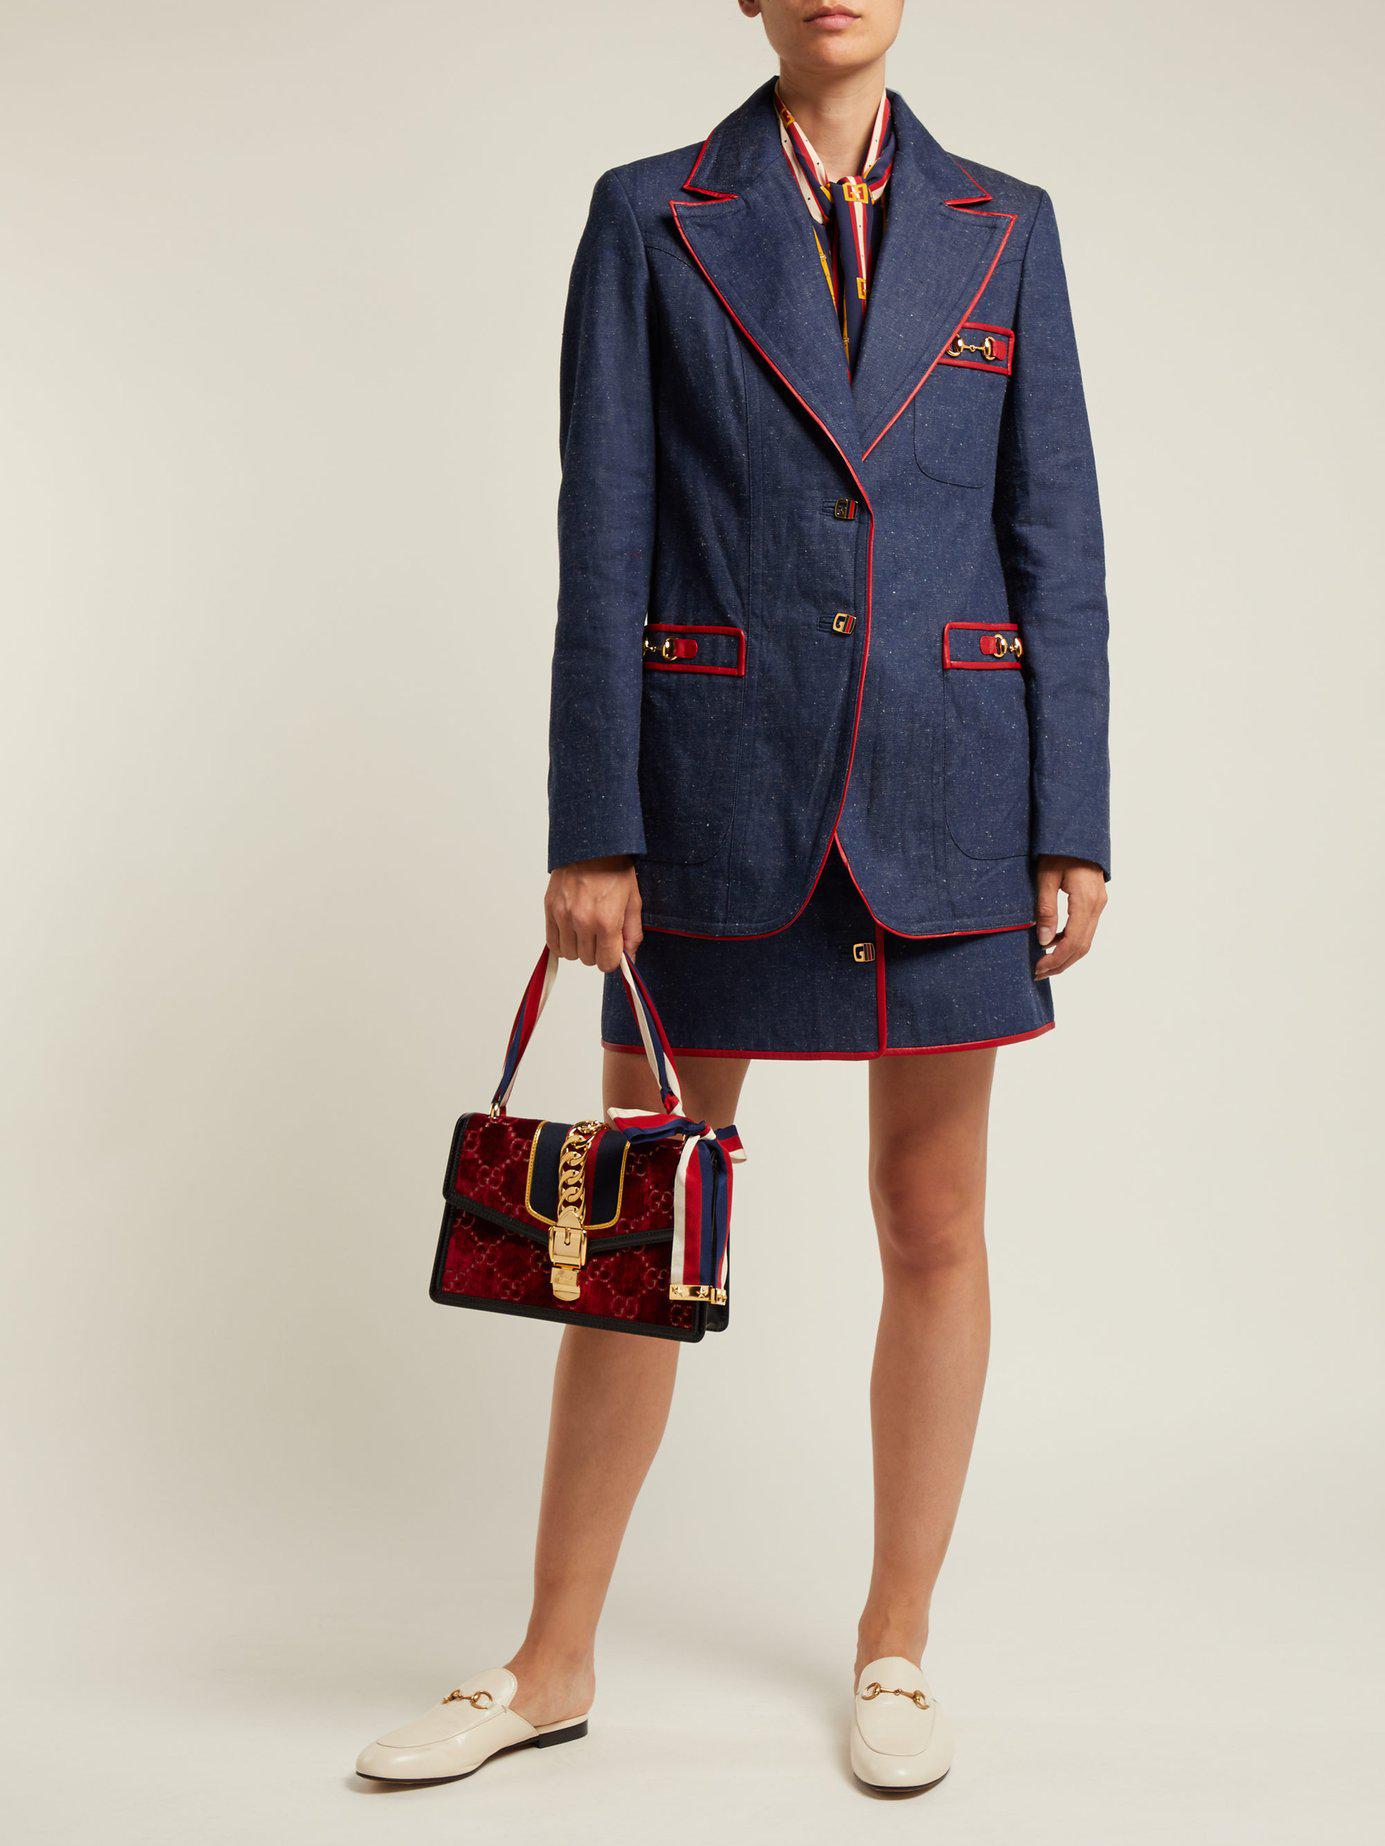 Gucci Sylvie Small Velvet Shoulder Bag in Burgundy (Red) - Lyst